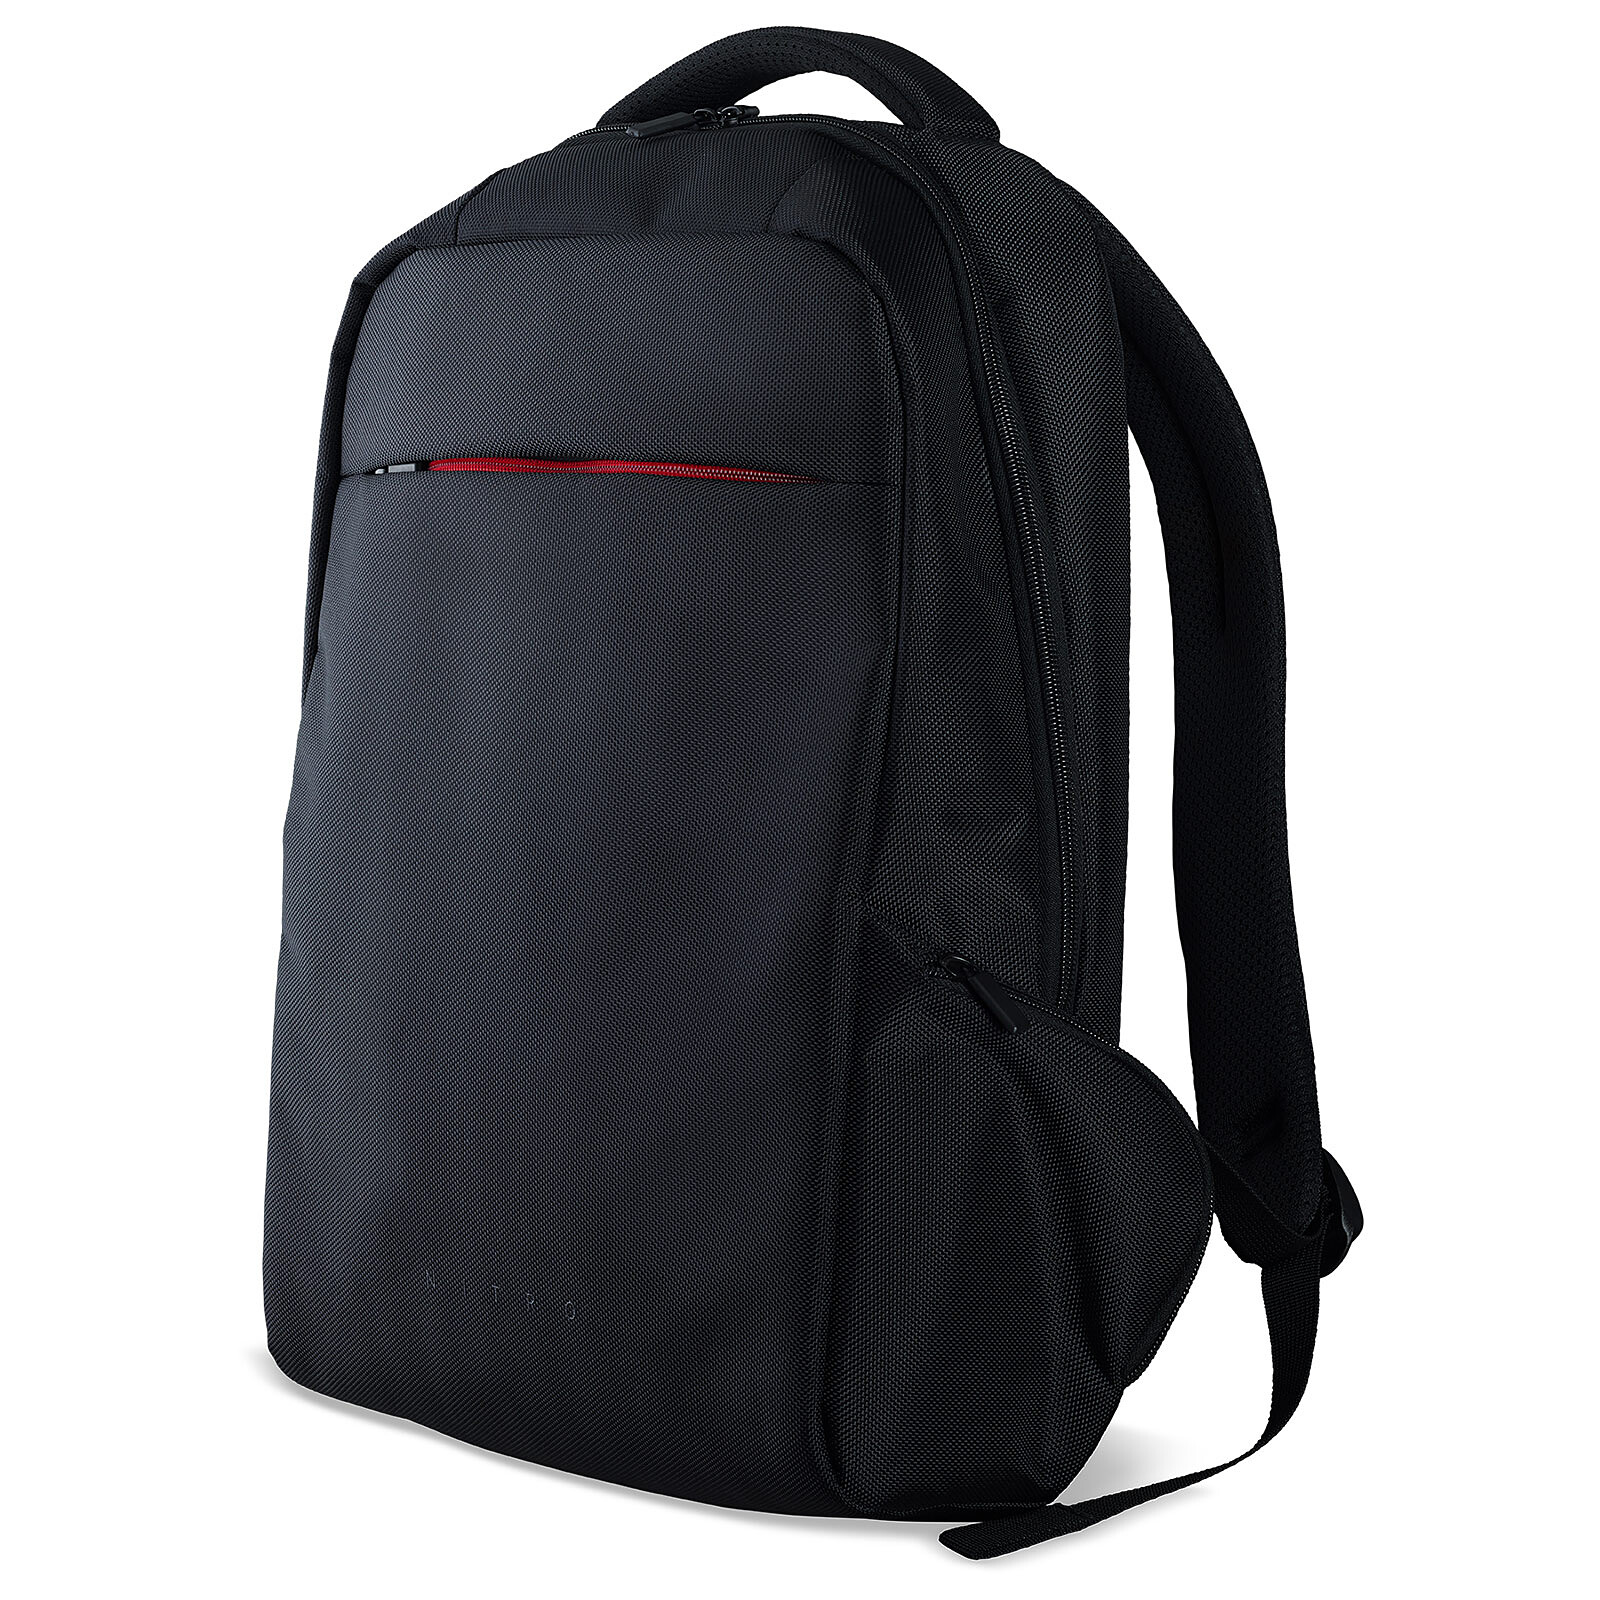 Acer Nitro Gaming Backpack 17 - Bag, backpack, case - LDLC 3-year ...